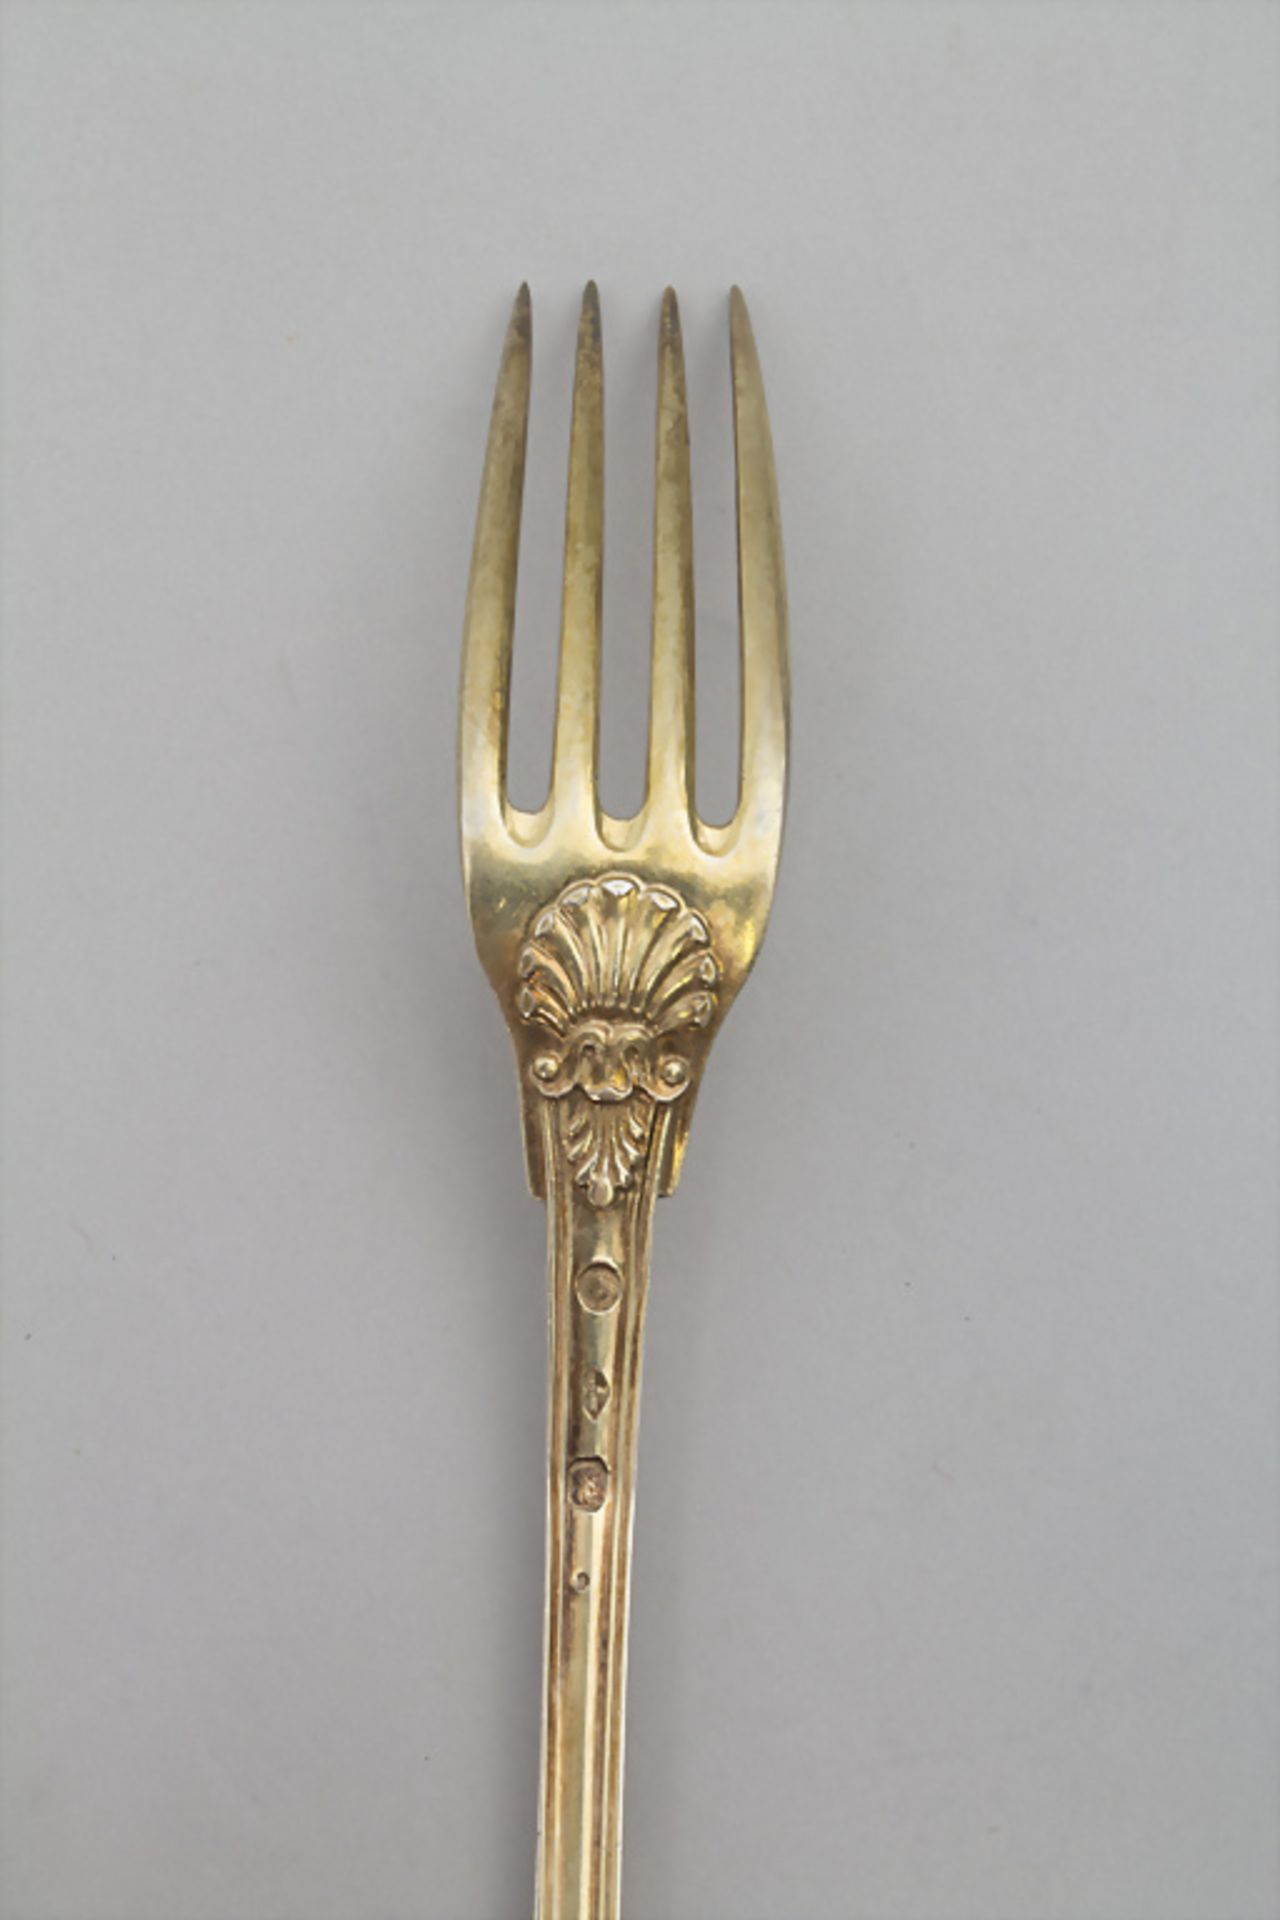 36 tlg. Silberbesteck / A 36-piece set of silver cutlery, Charles Salomon Mahler, Paris, 1824-1833 - Image 9 of 15